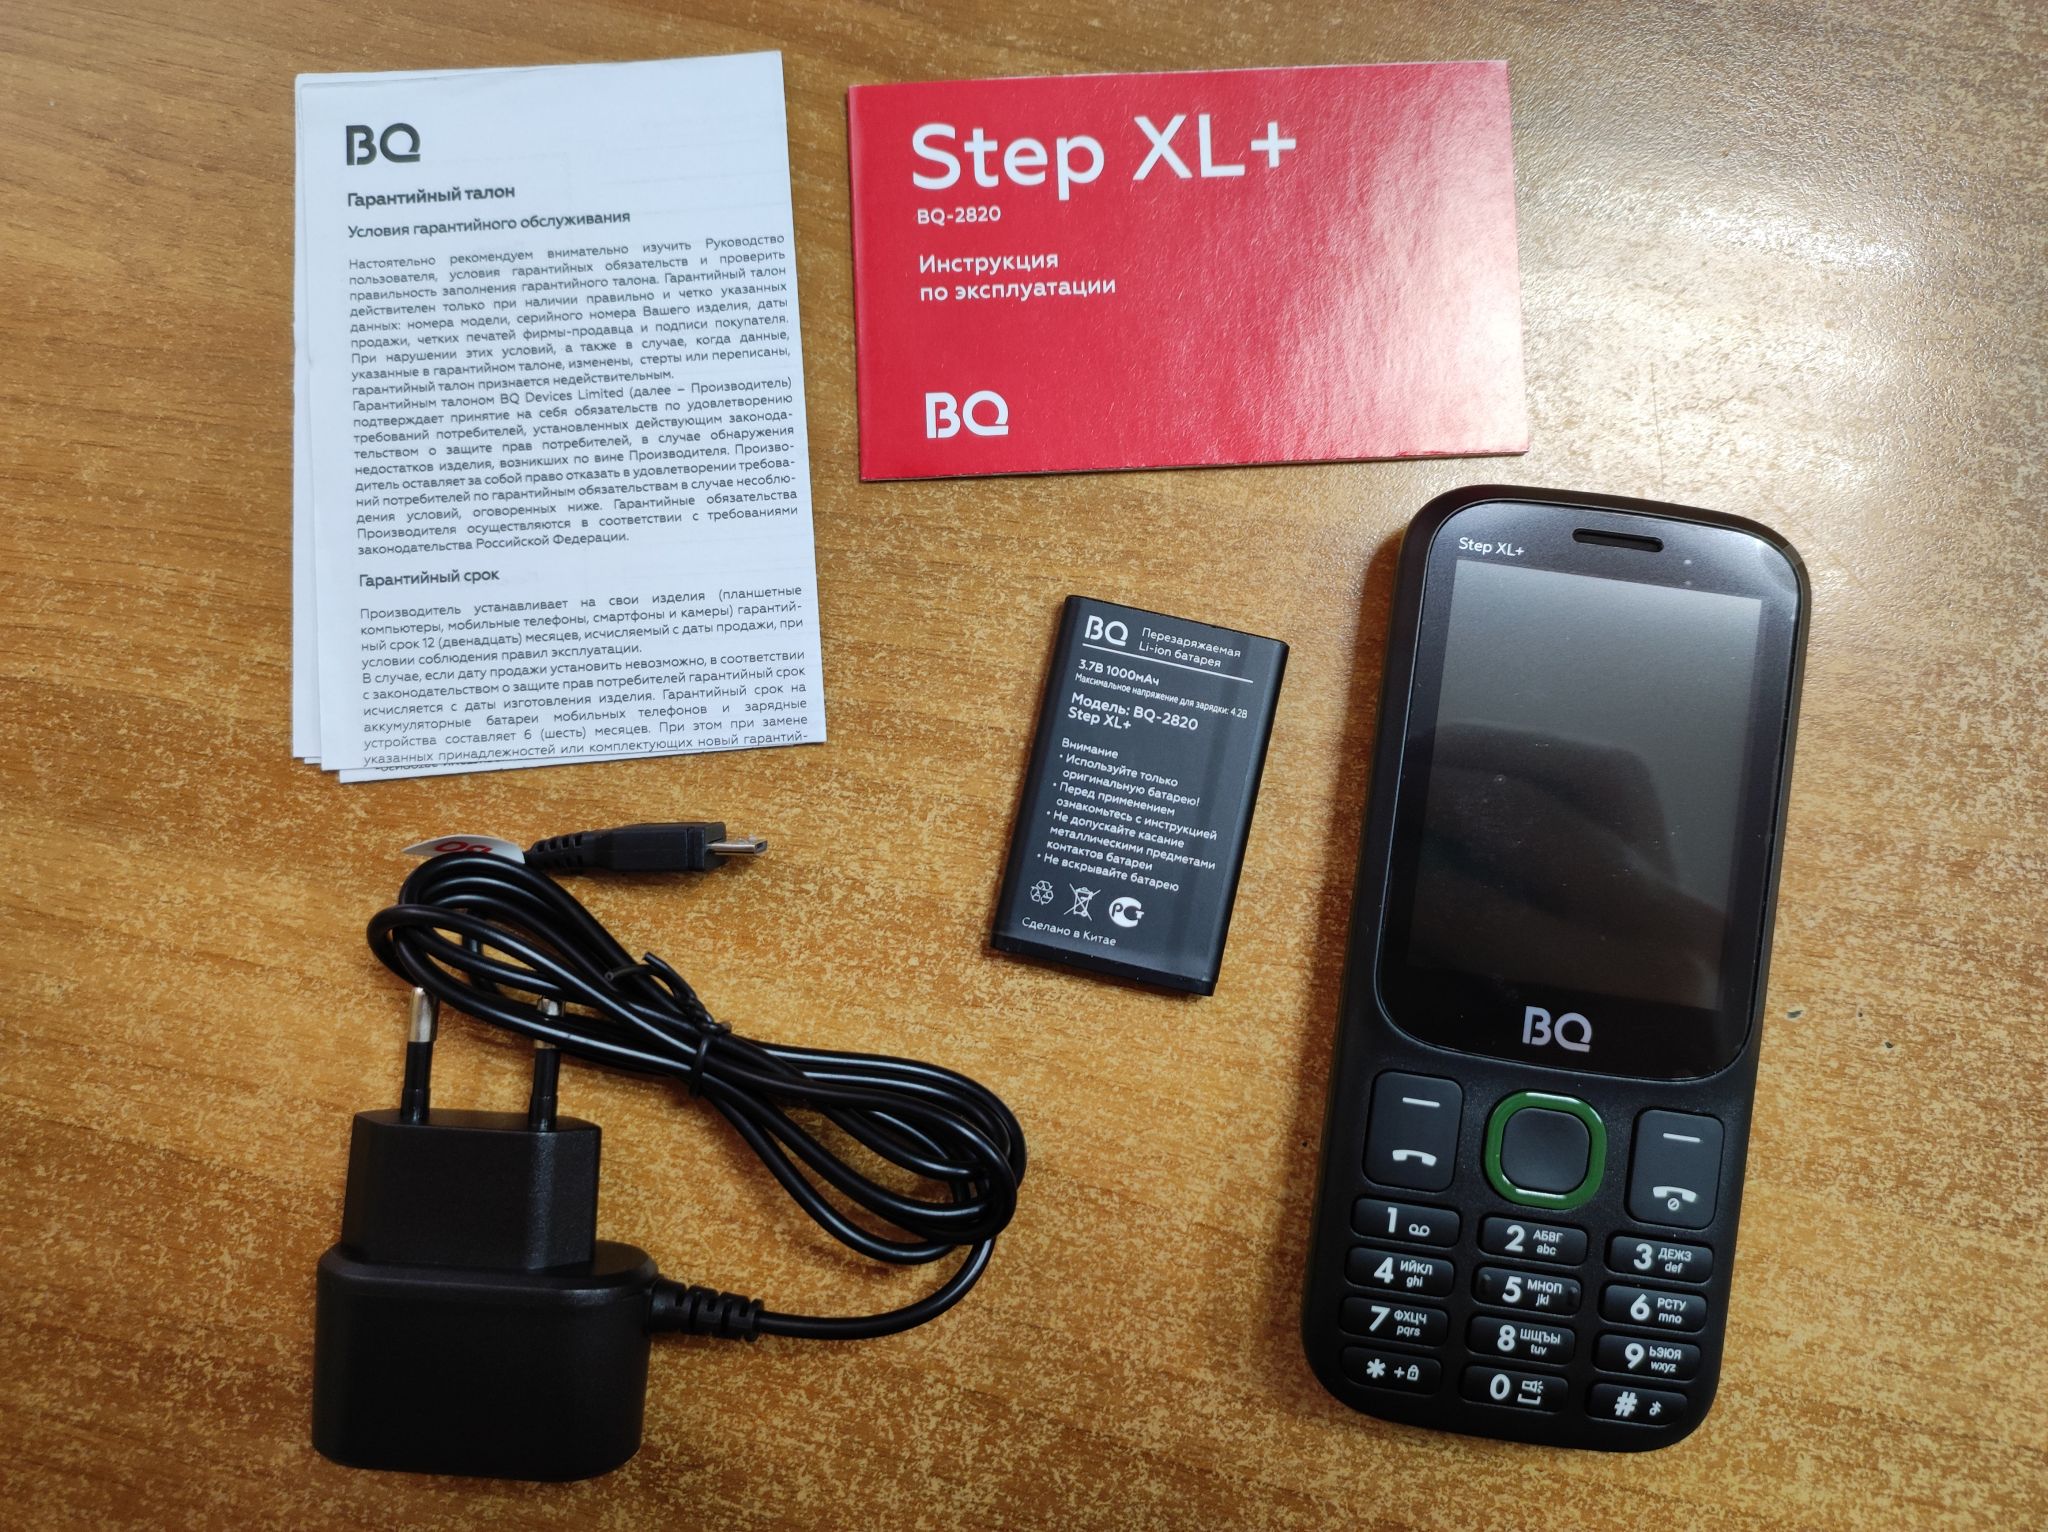 Bq step xl. Телефон моб. BQ 2820 Step XL+. Телефон BQ 2820 Step XL. BQ 2820 Step XL+.